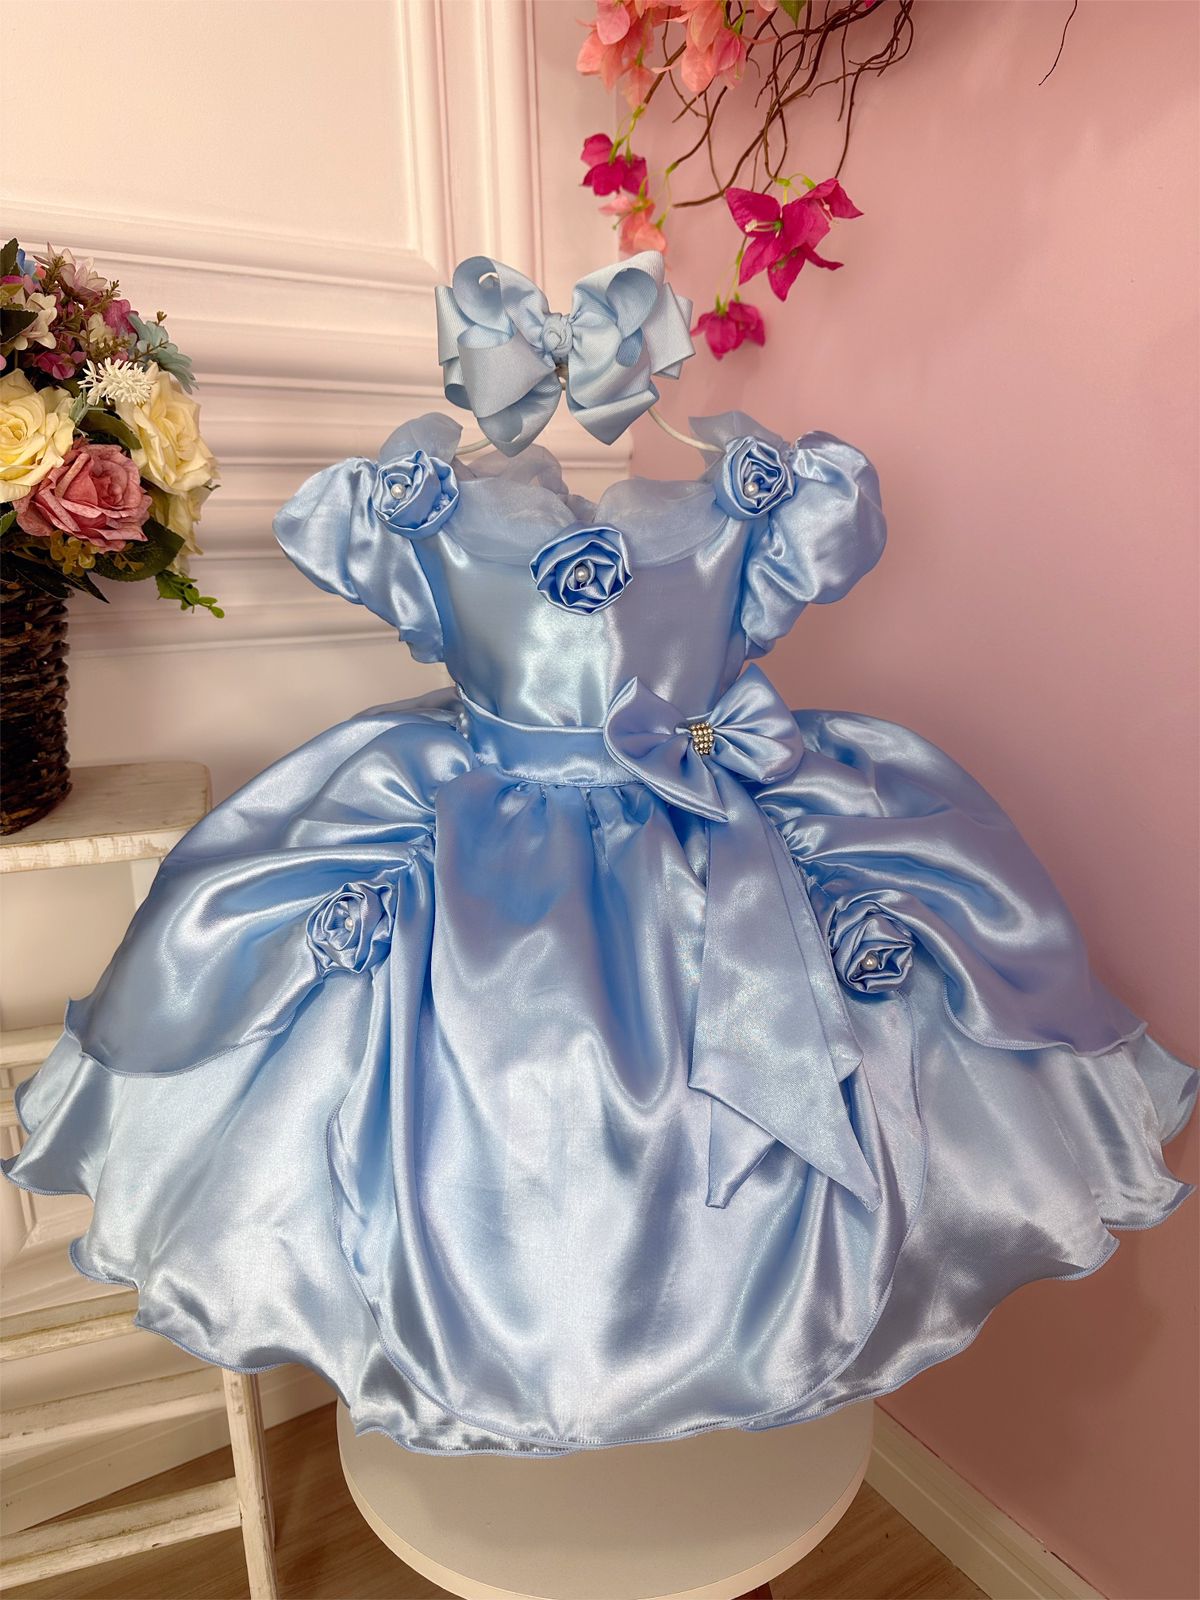 Vestido Infantil Princesa Elsa - Frozen 2  Floresça Ateliê - Floresça  Ateliê Infantil